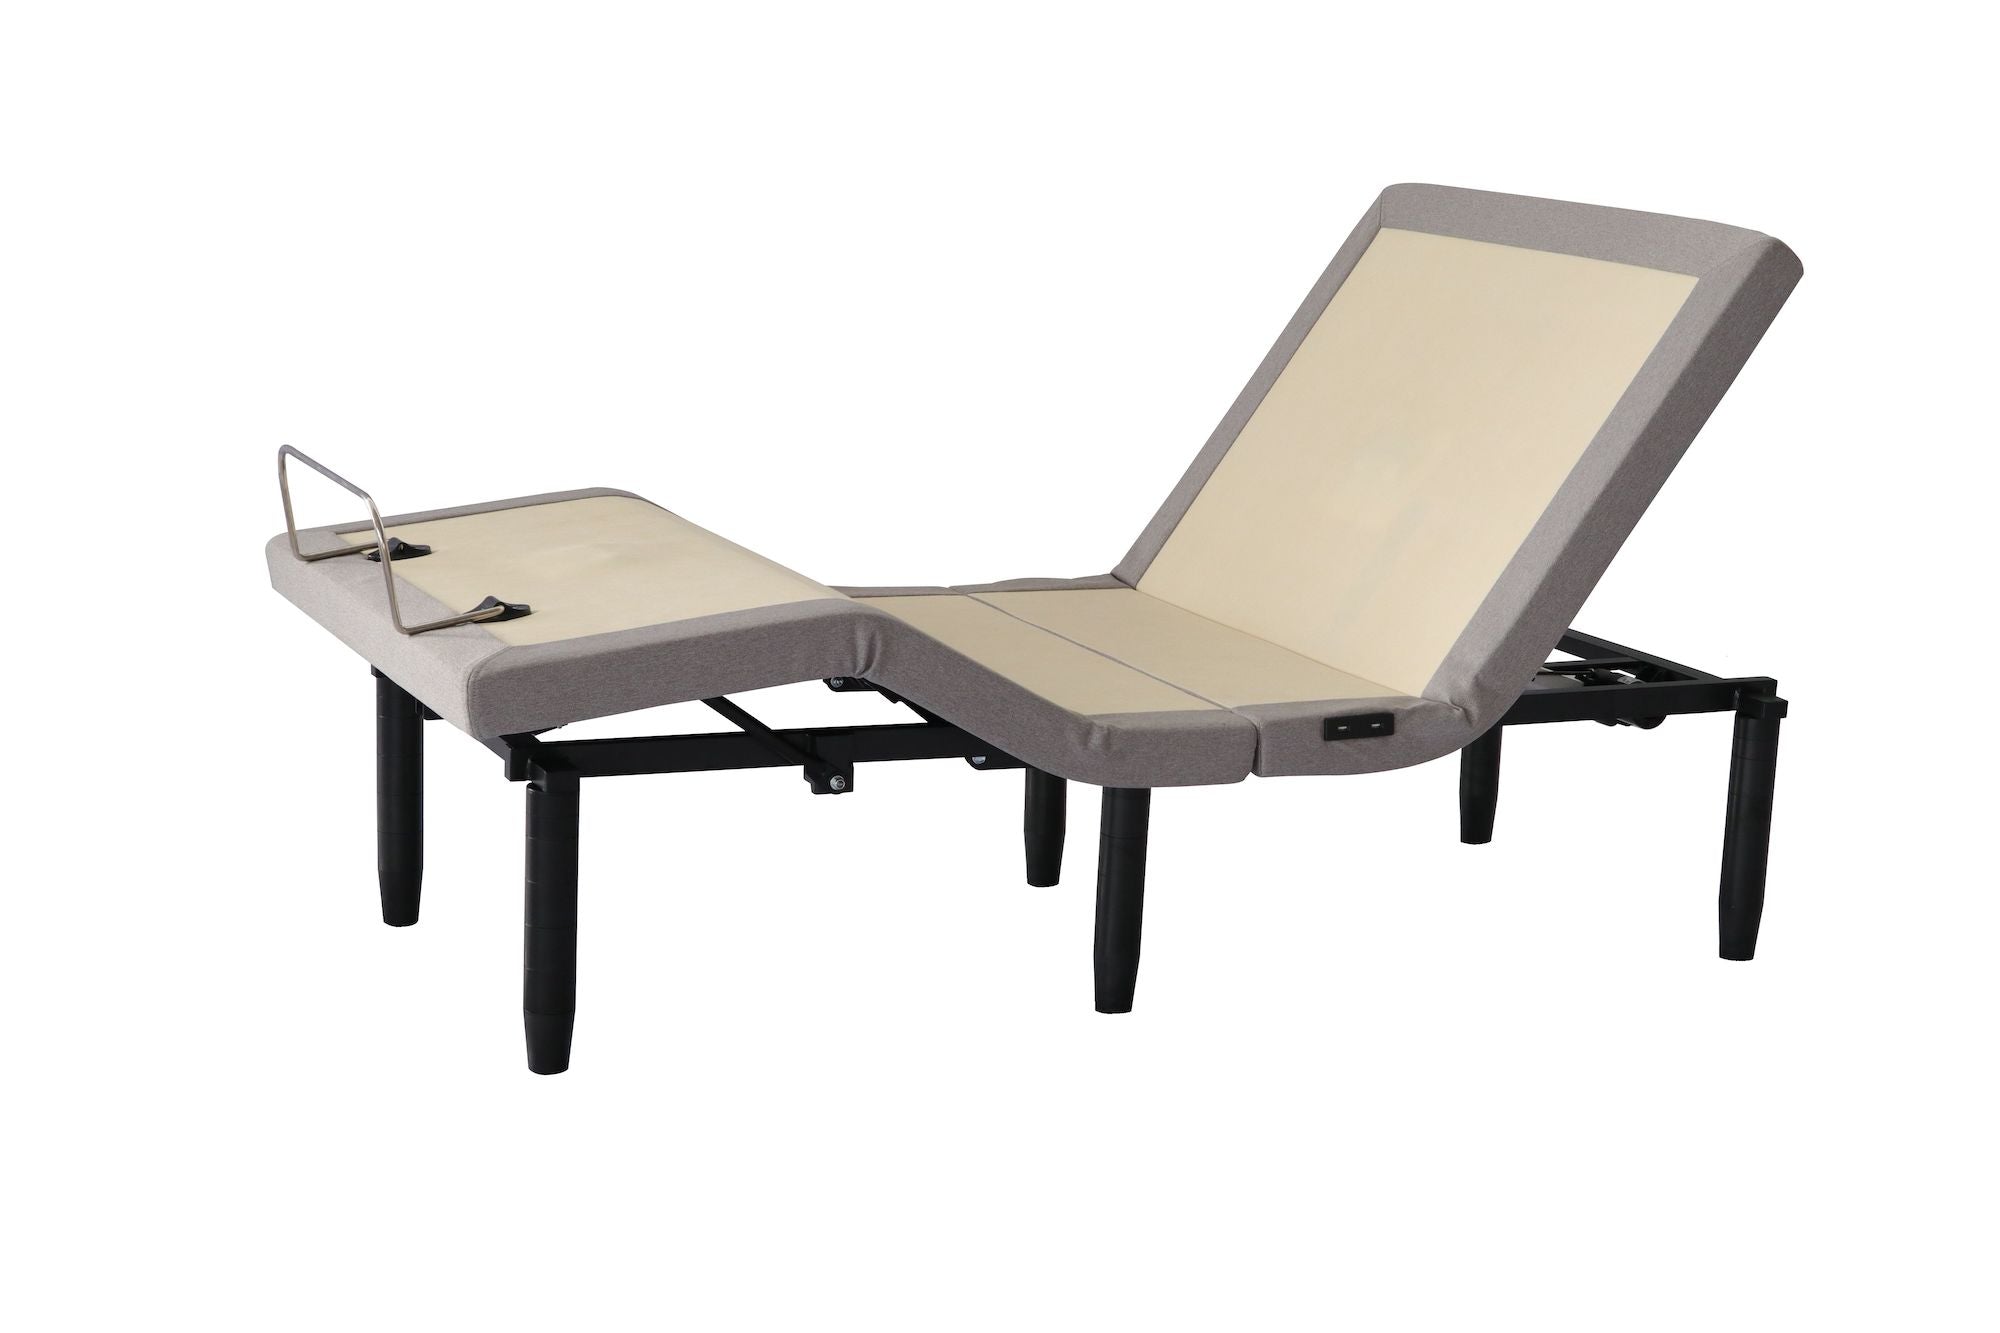 The New Niagara 'Adjustamatic' Model M-4500 Dreameasy  Adjustable Bed